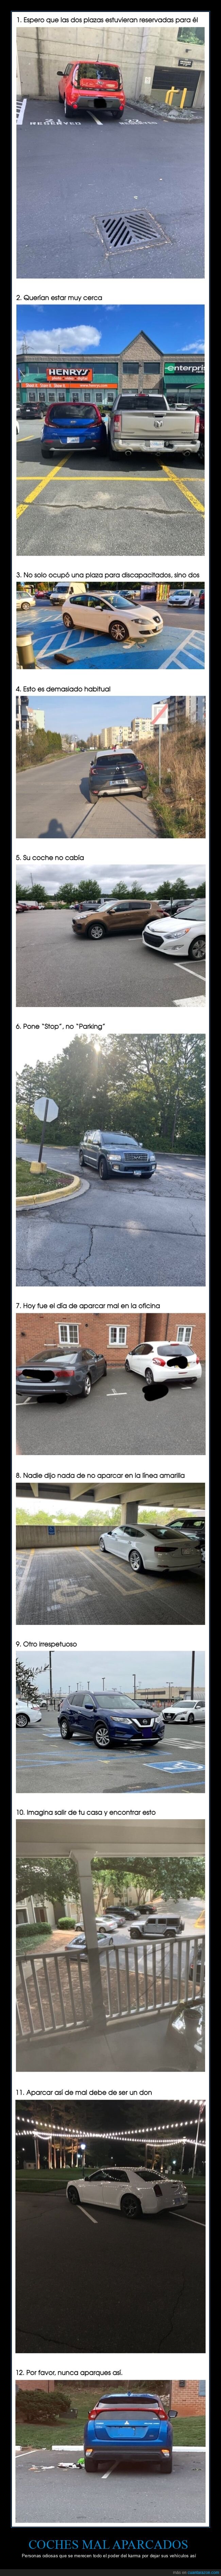 coches,aparcados,mal